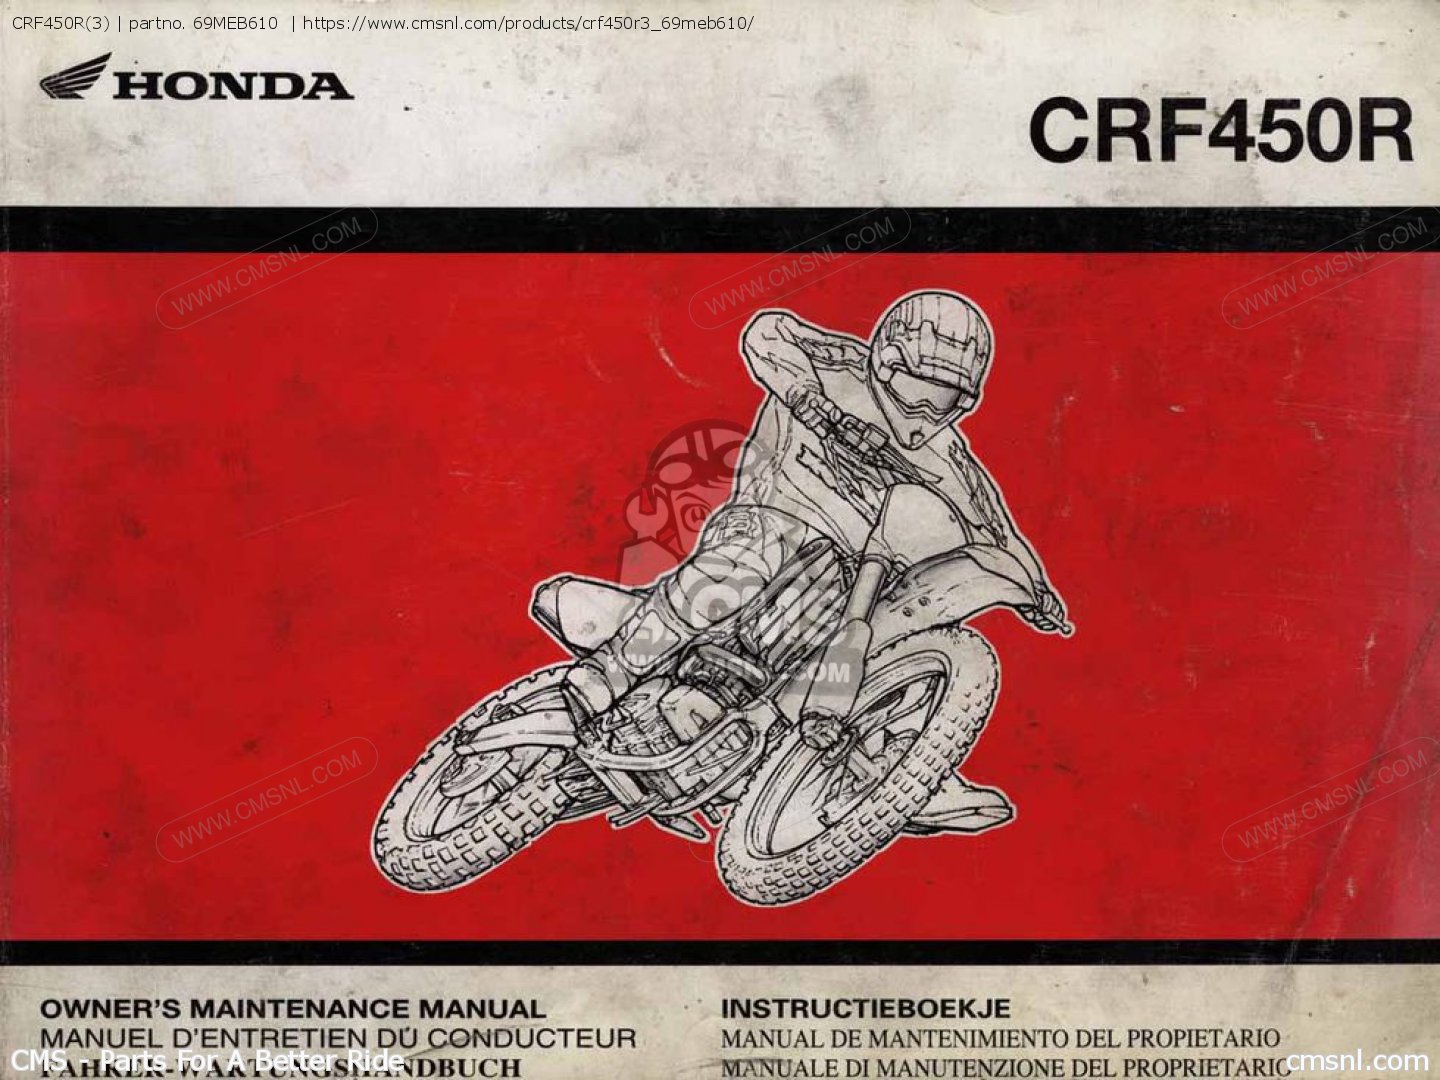 2008 Honda crf450r service manual free #2